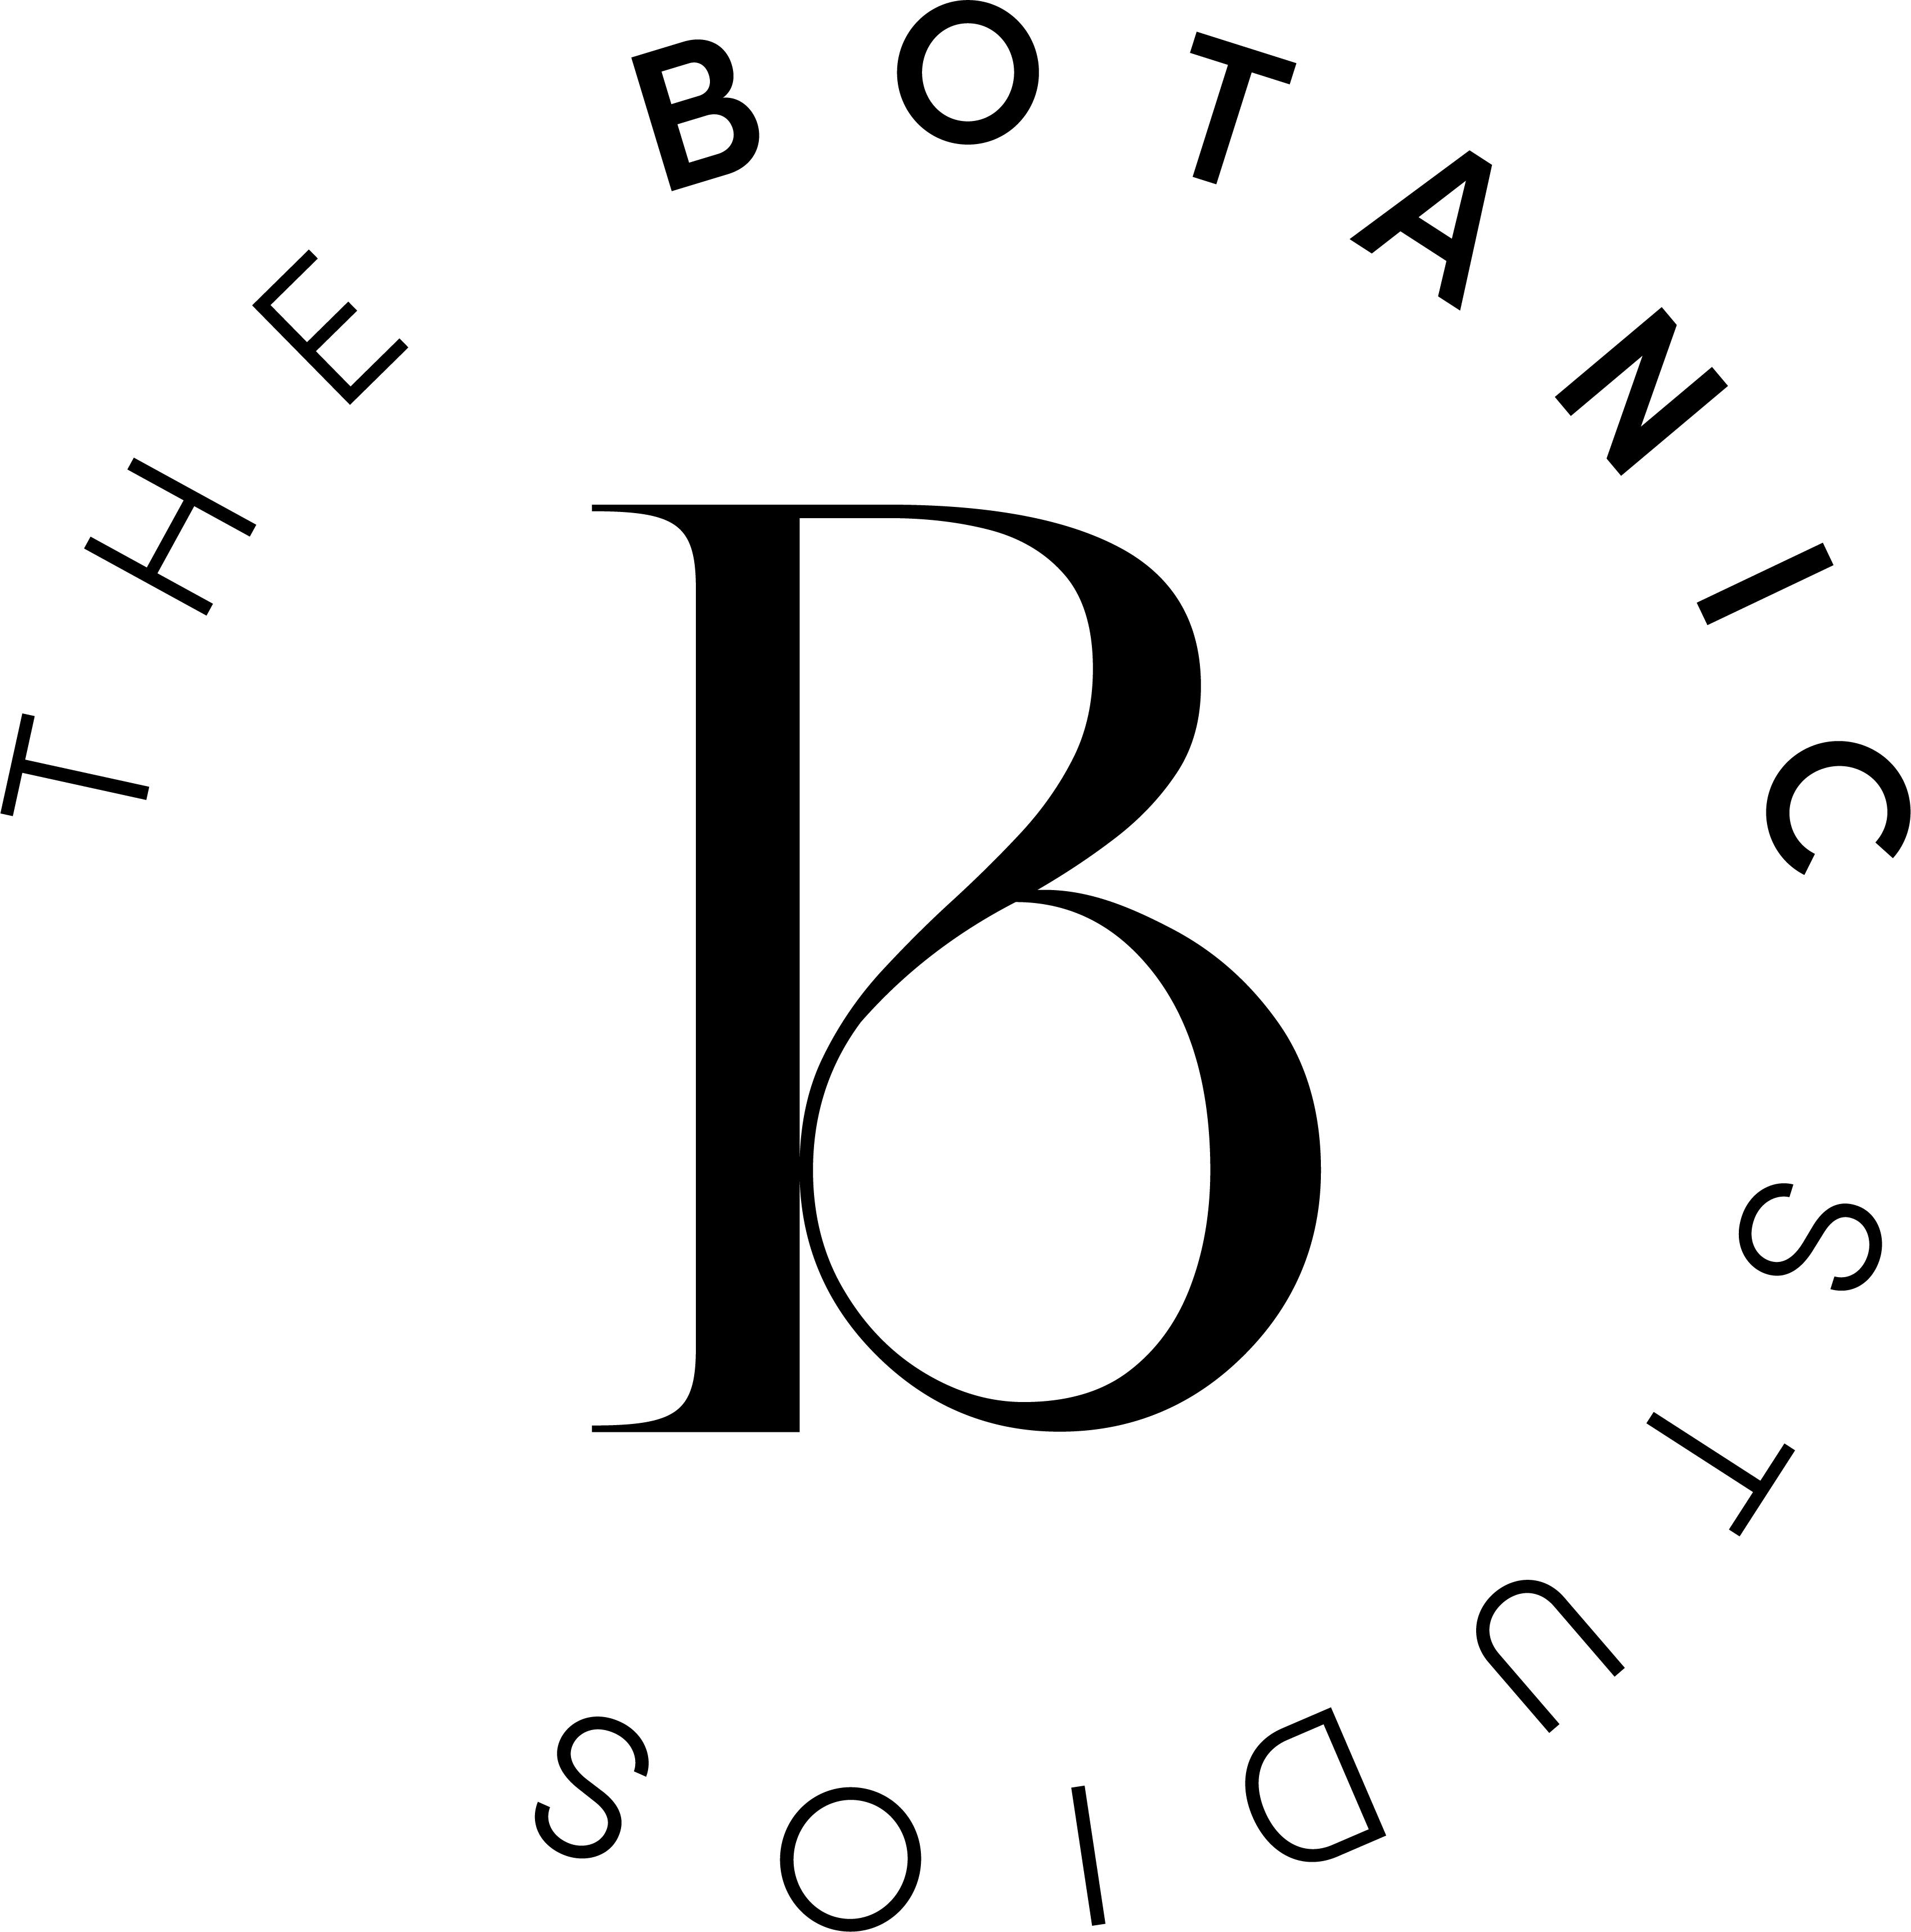 The Botanic Studios